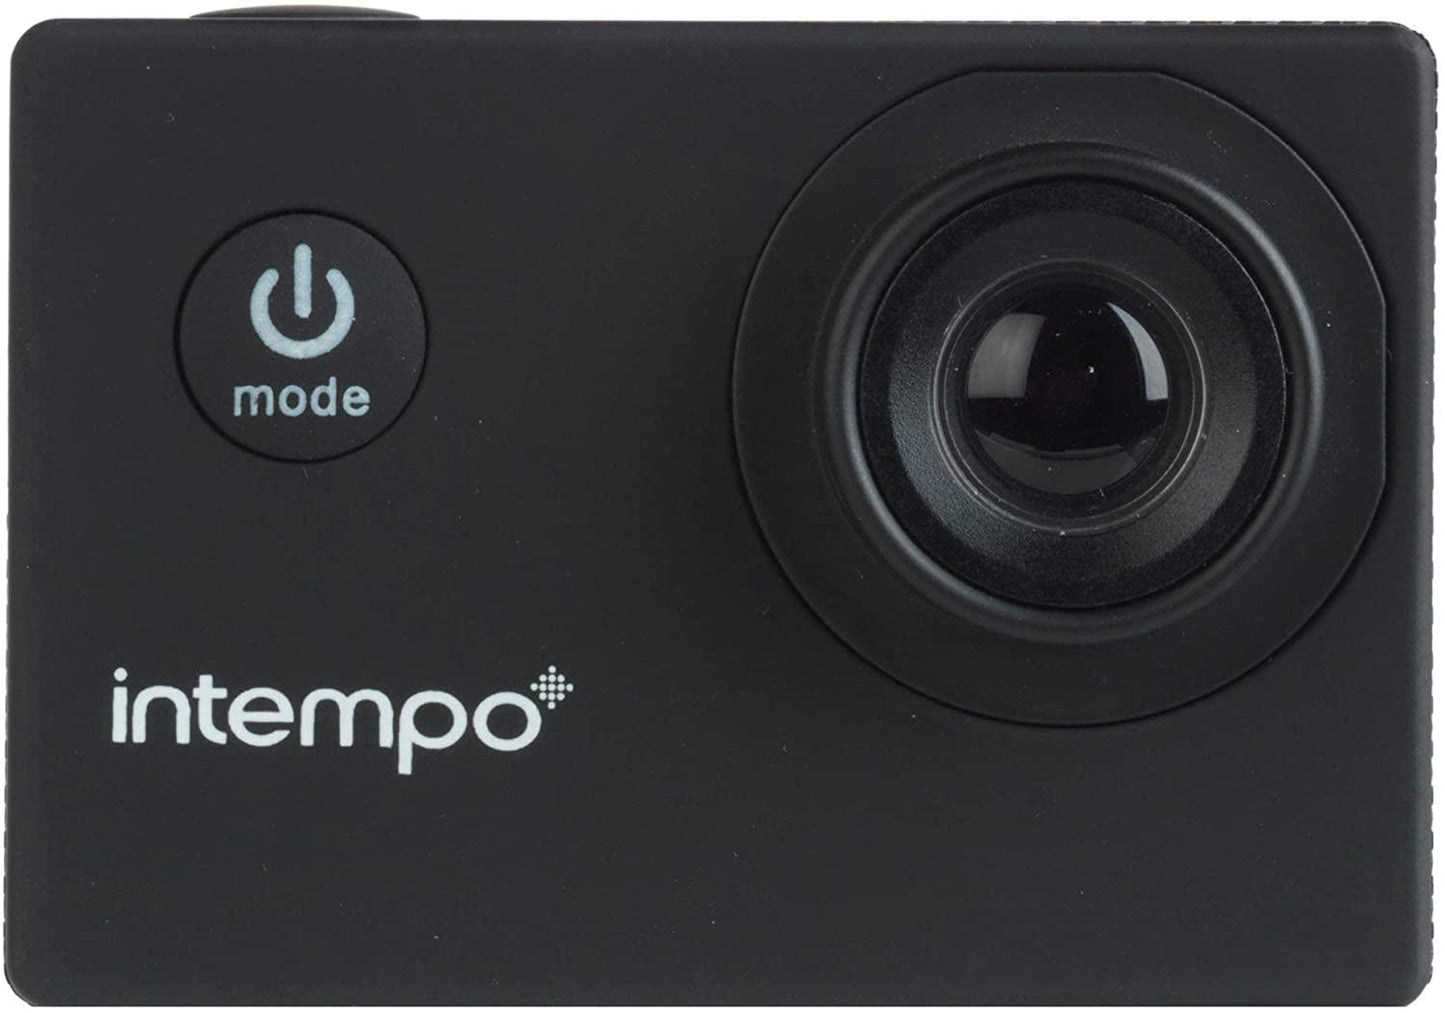 Intempo Full HD Waterproof Action Camera